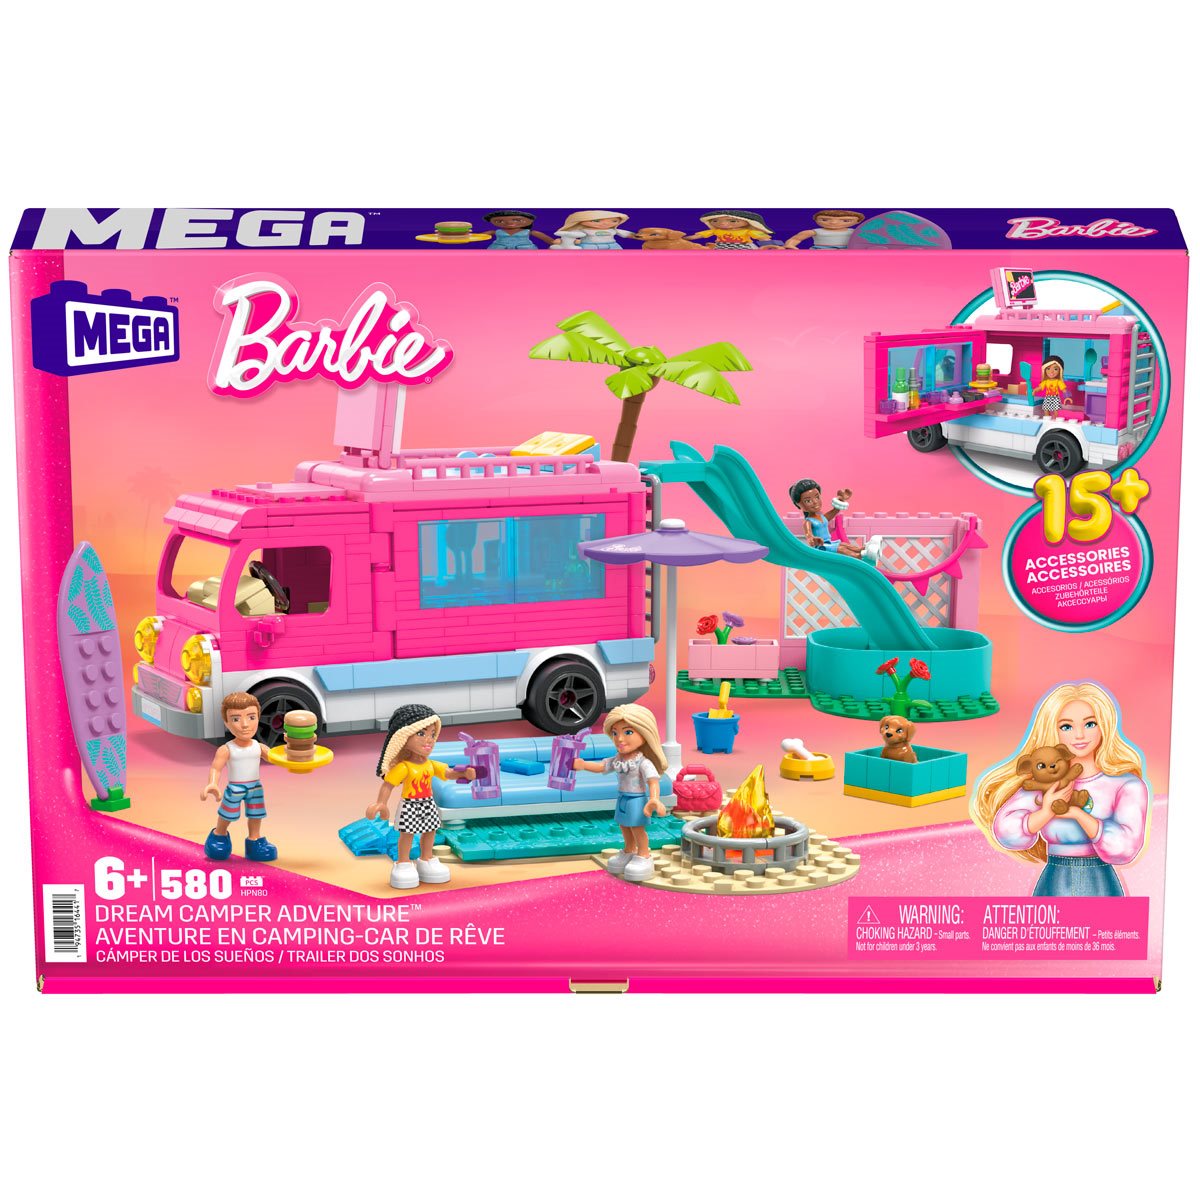 MEGA Barbie Dream Camper Adventure Building Toy